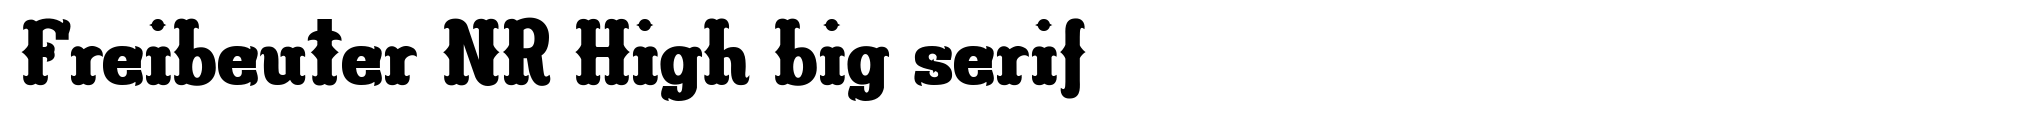 Freibeuter NR High big serif image